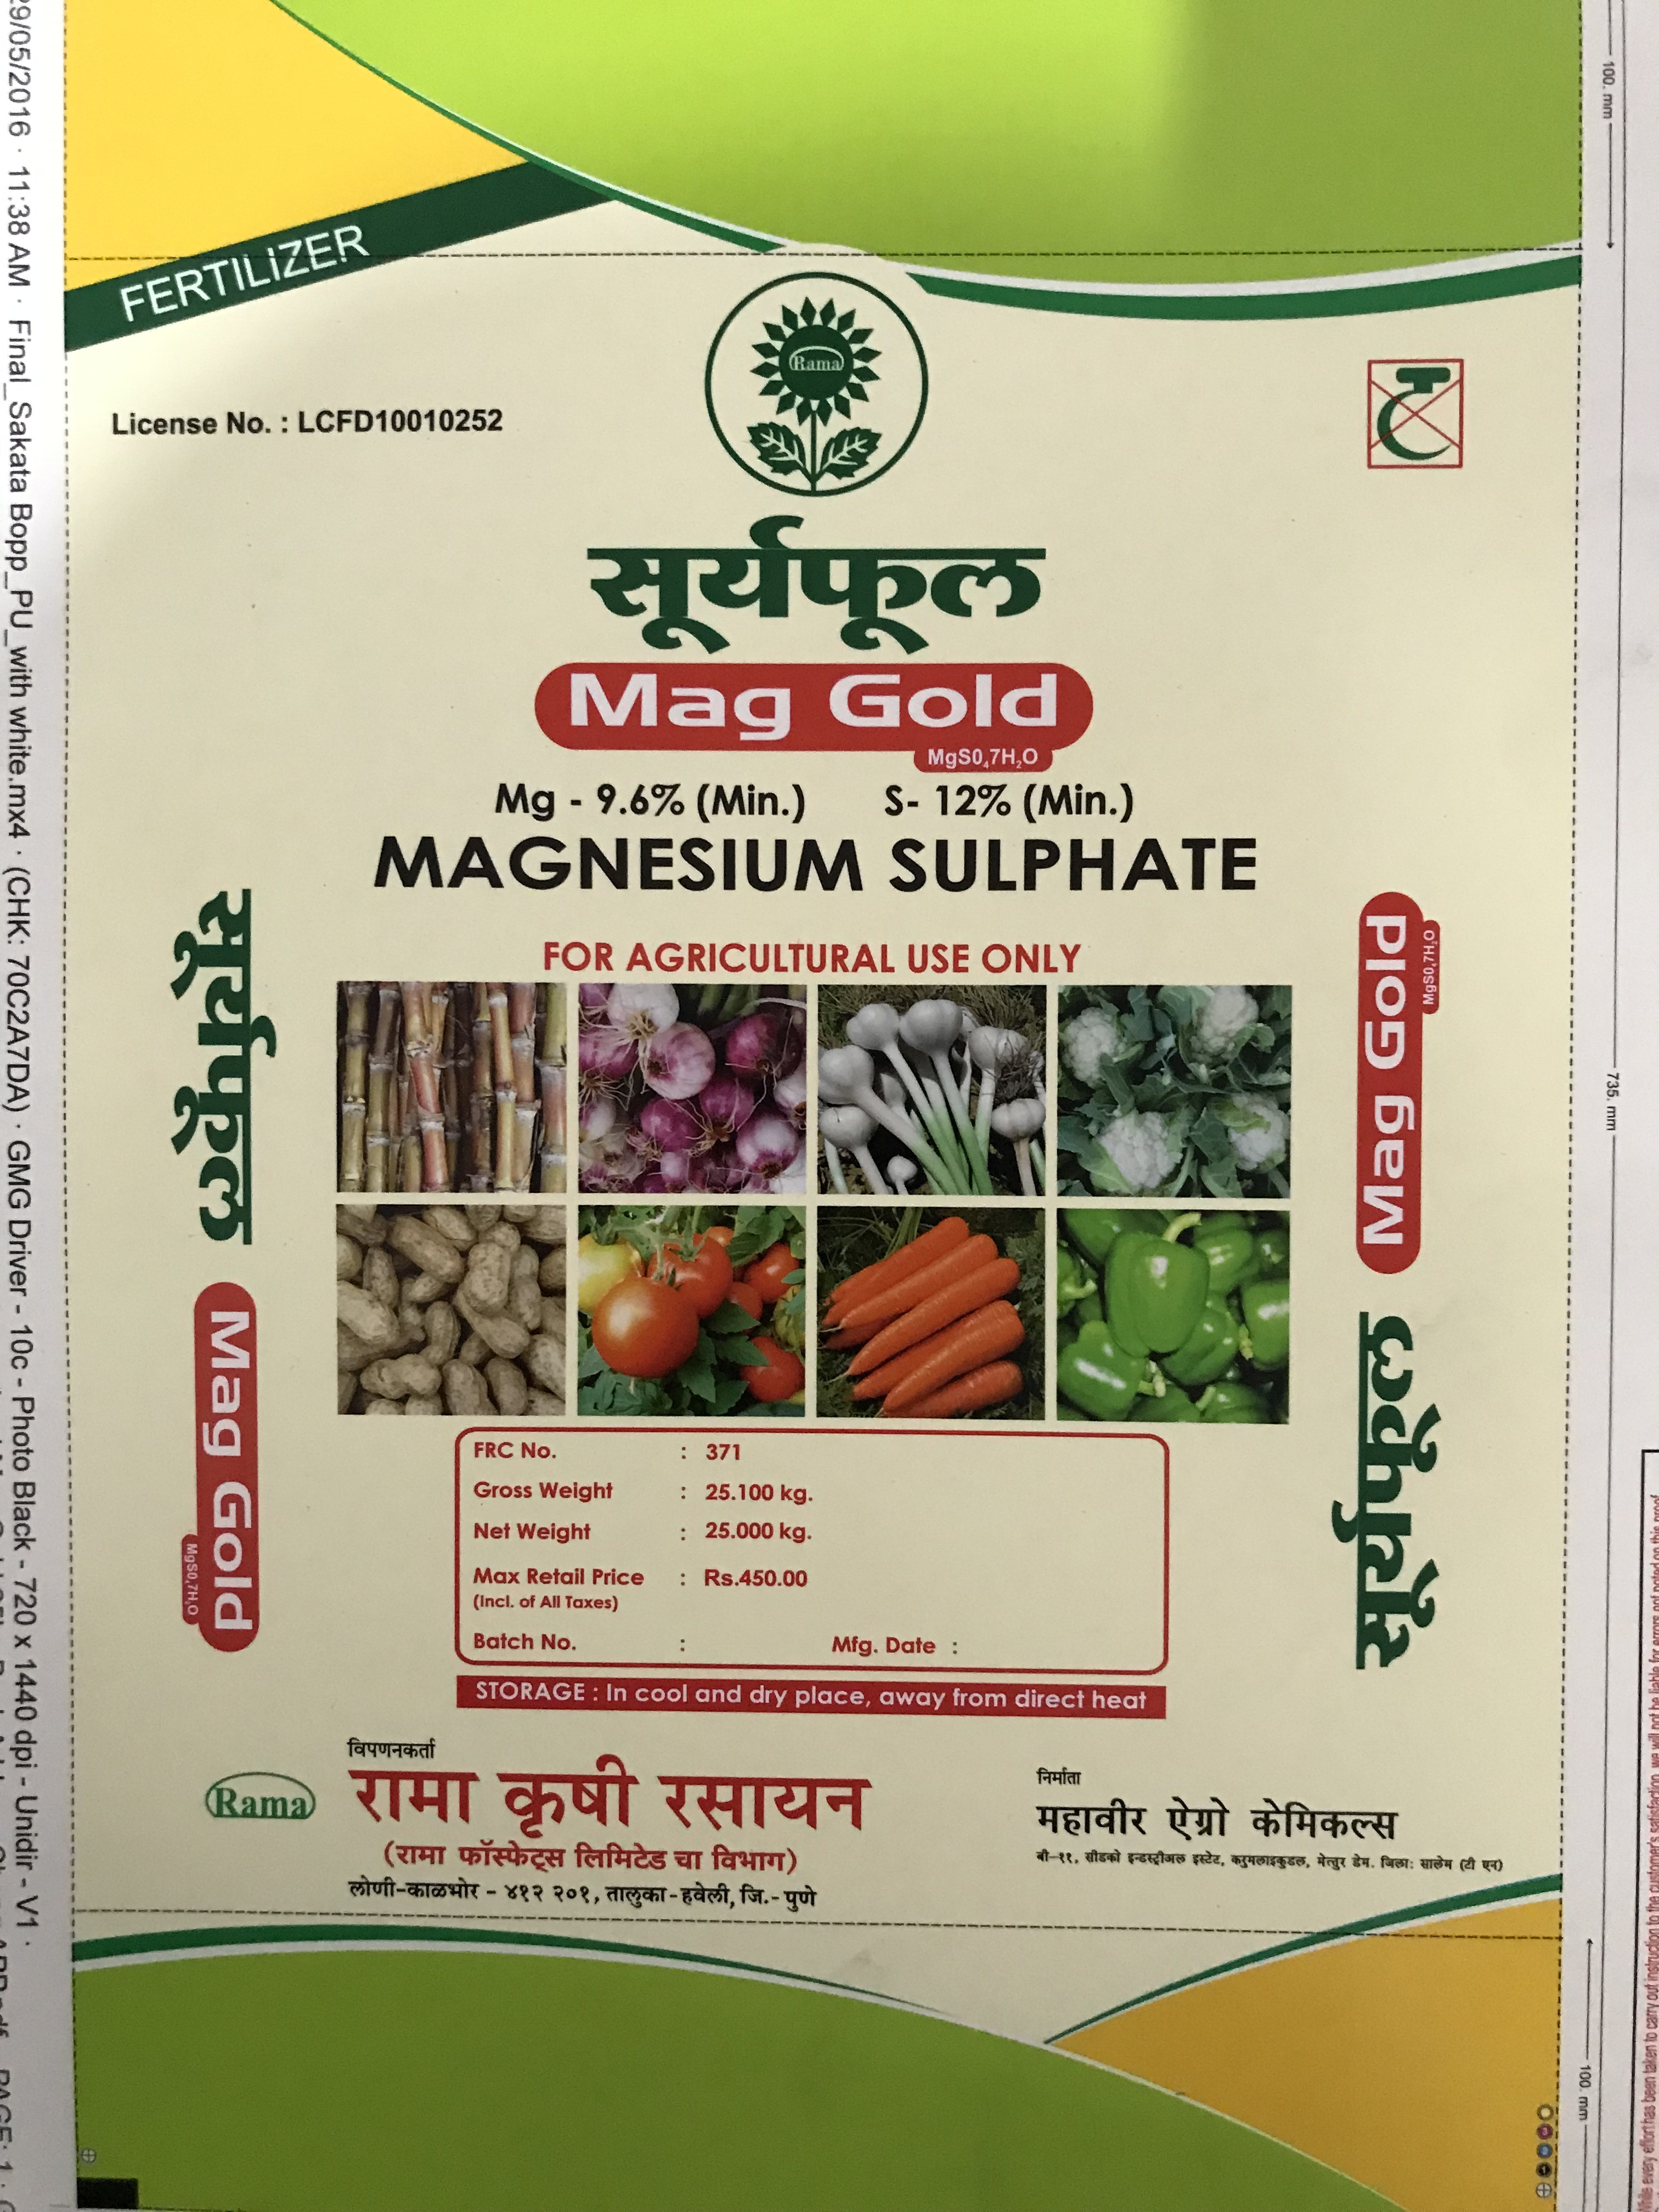 BOPP Fertilizer And Manure Bags